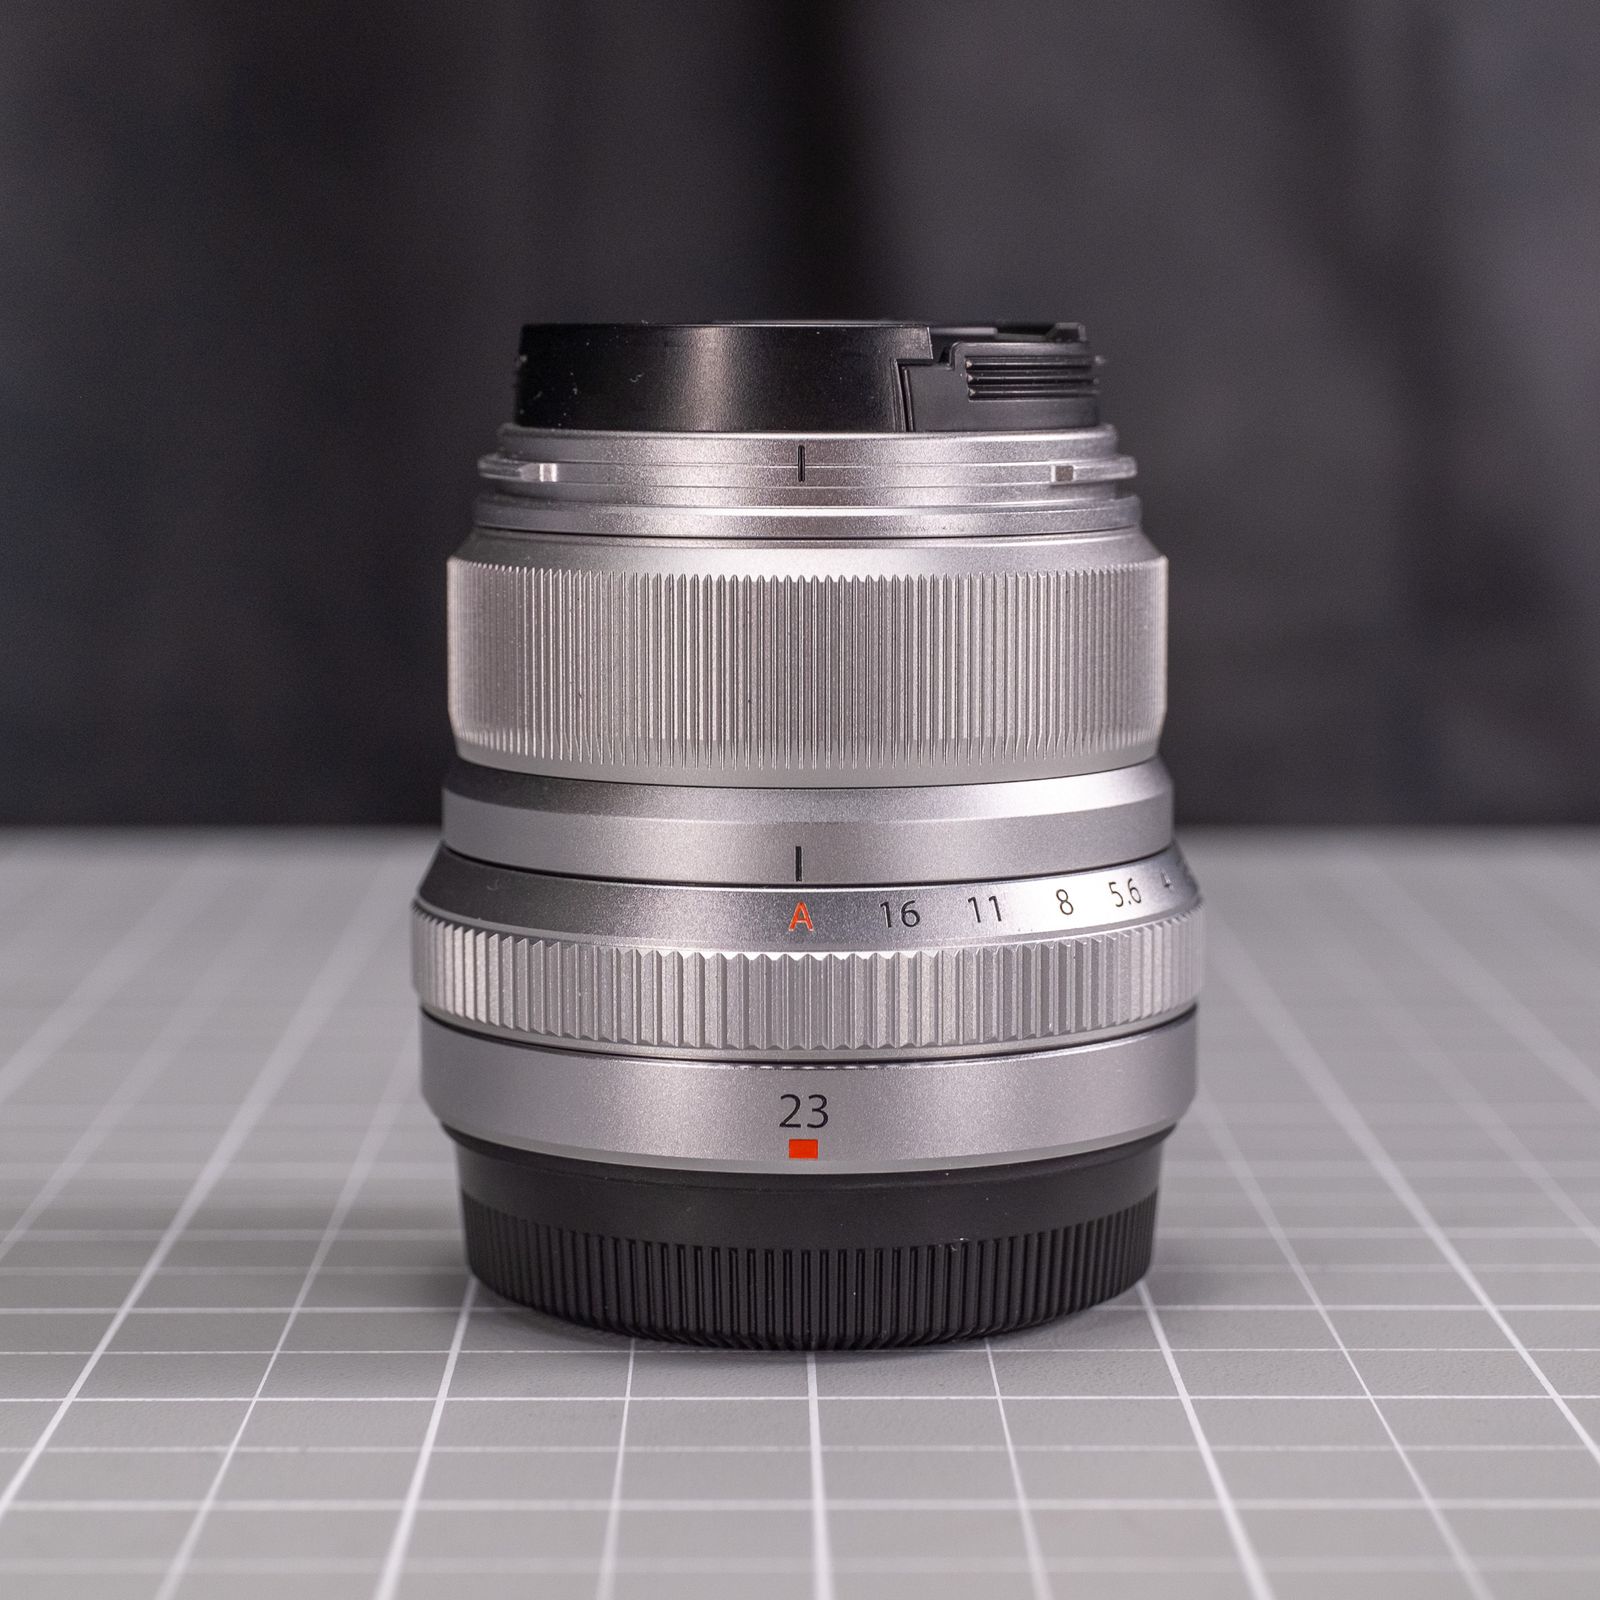 Fujifilm XF 23mm f/2.0 R WR Lens From Jeff's Gear Shop On Gear Focus